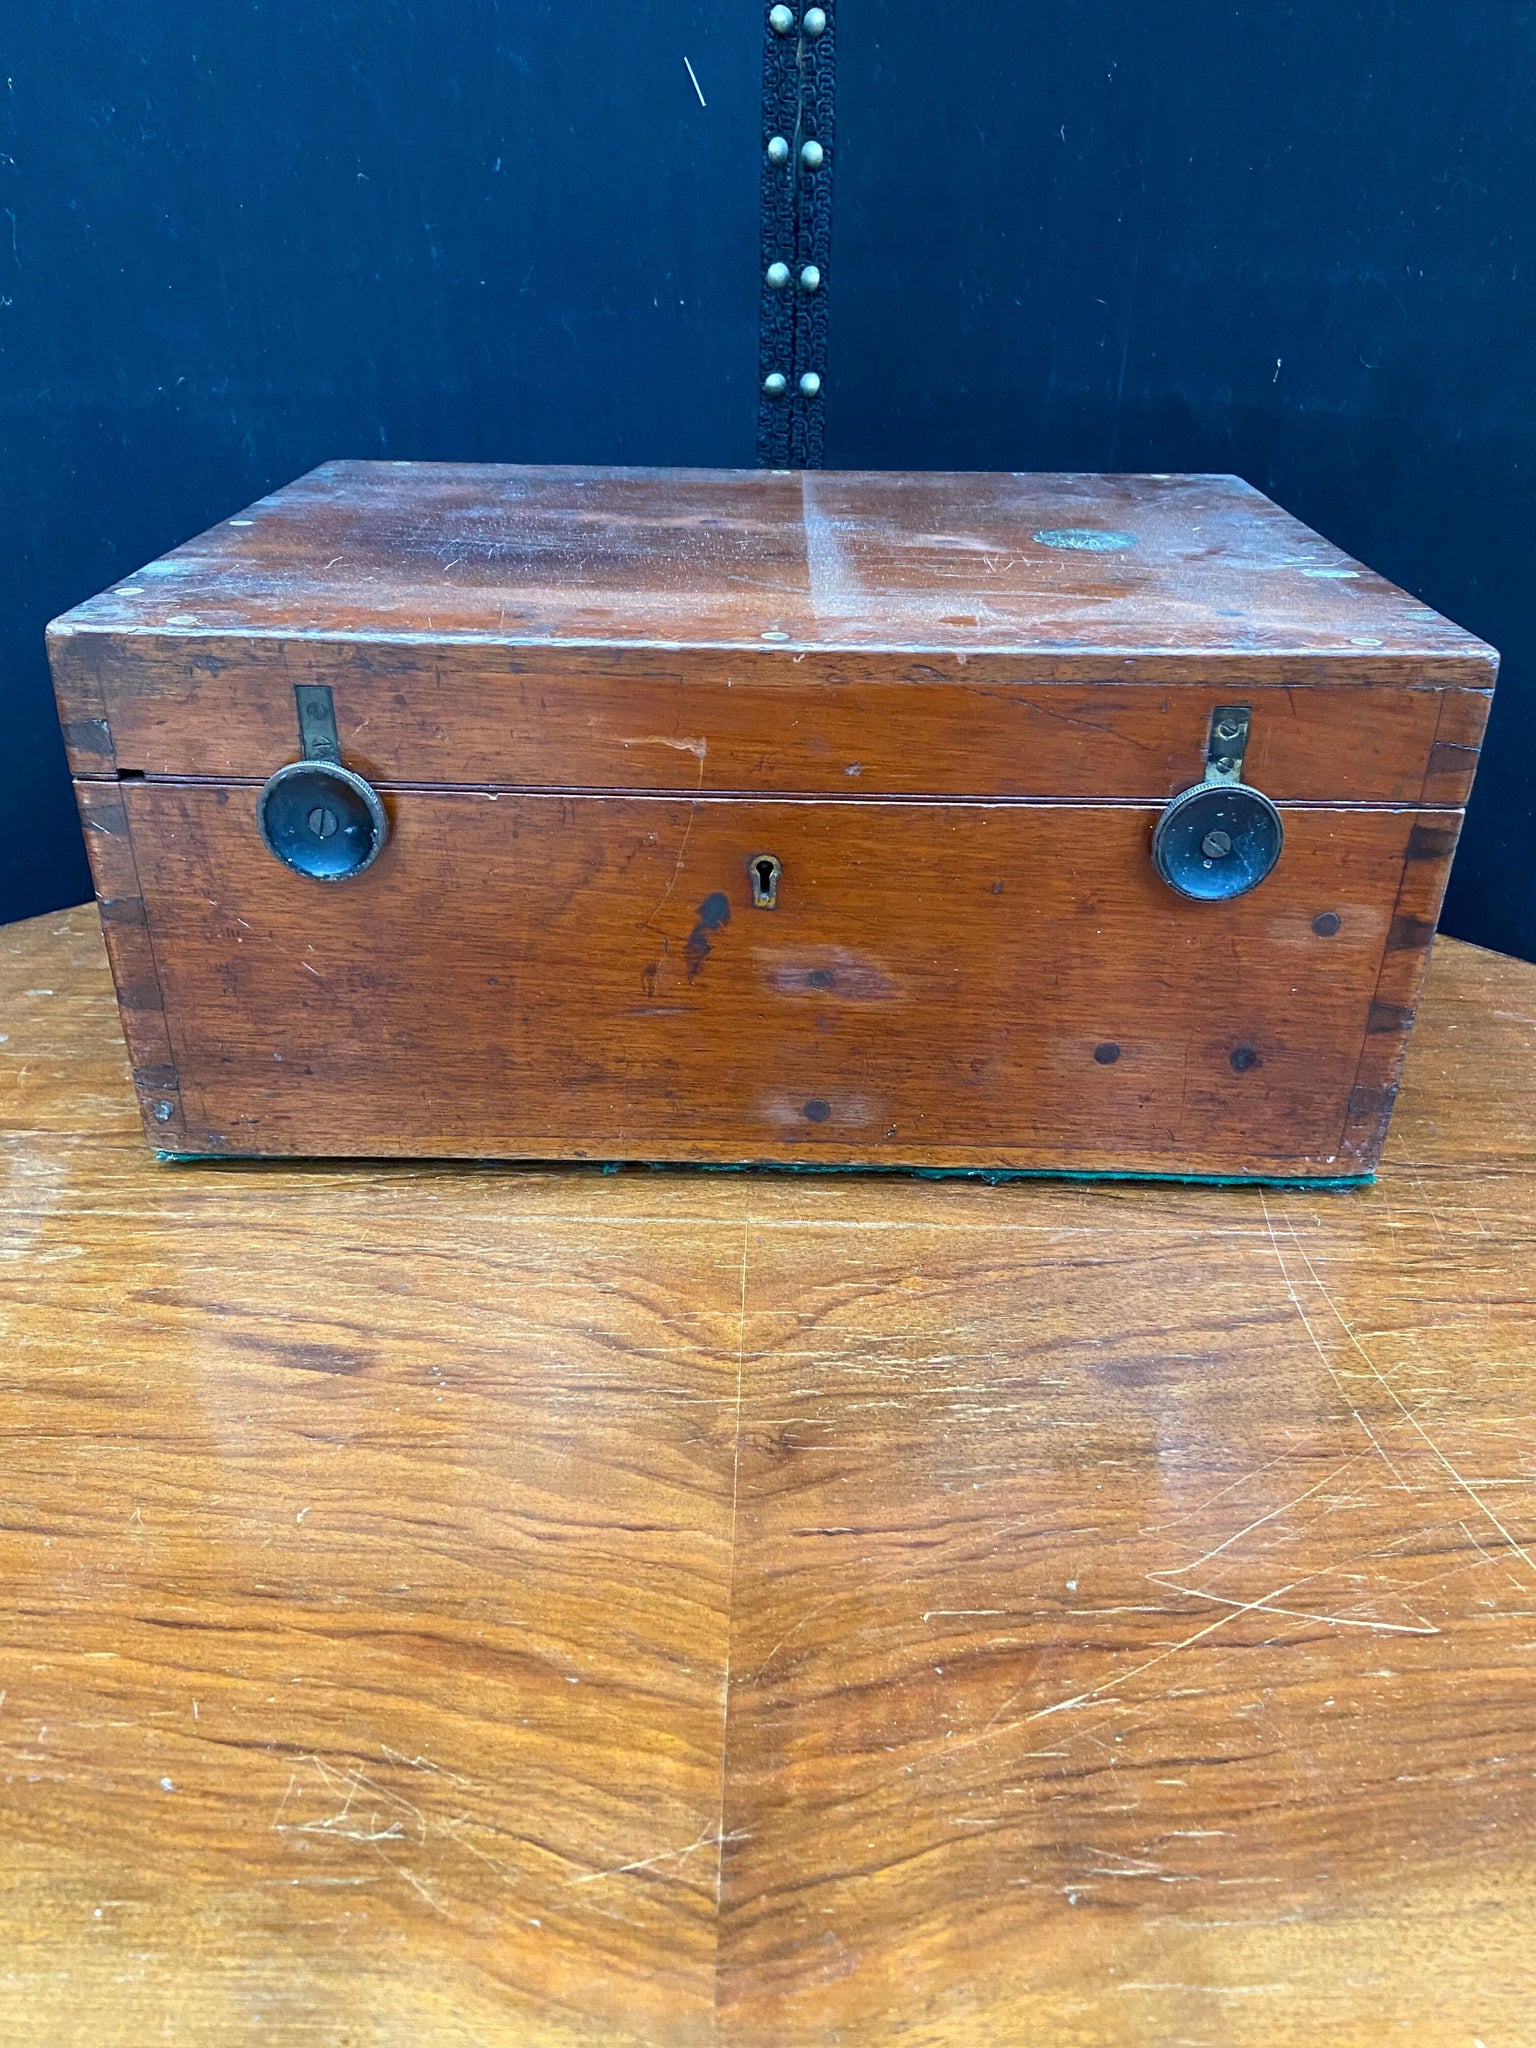 Wooden Desktop Box with Black Dials